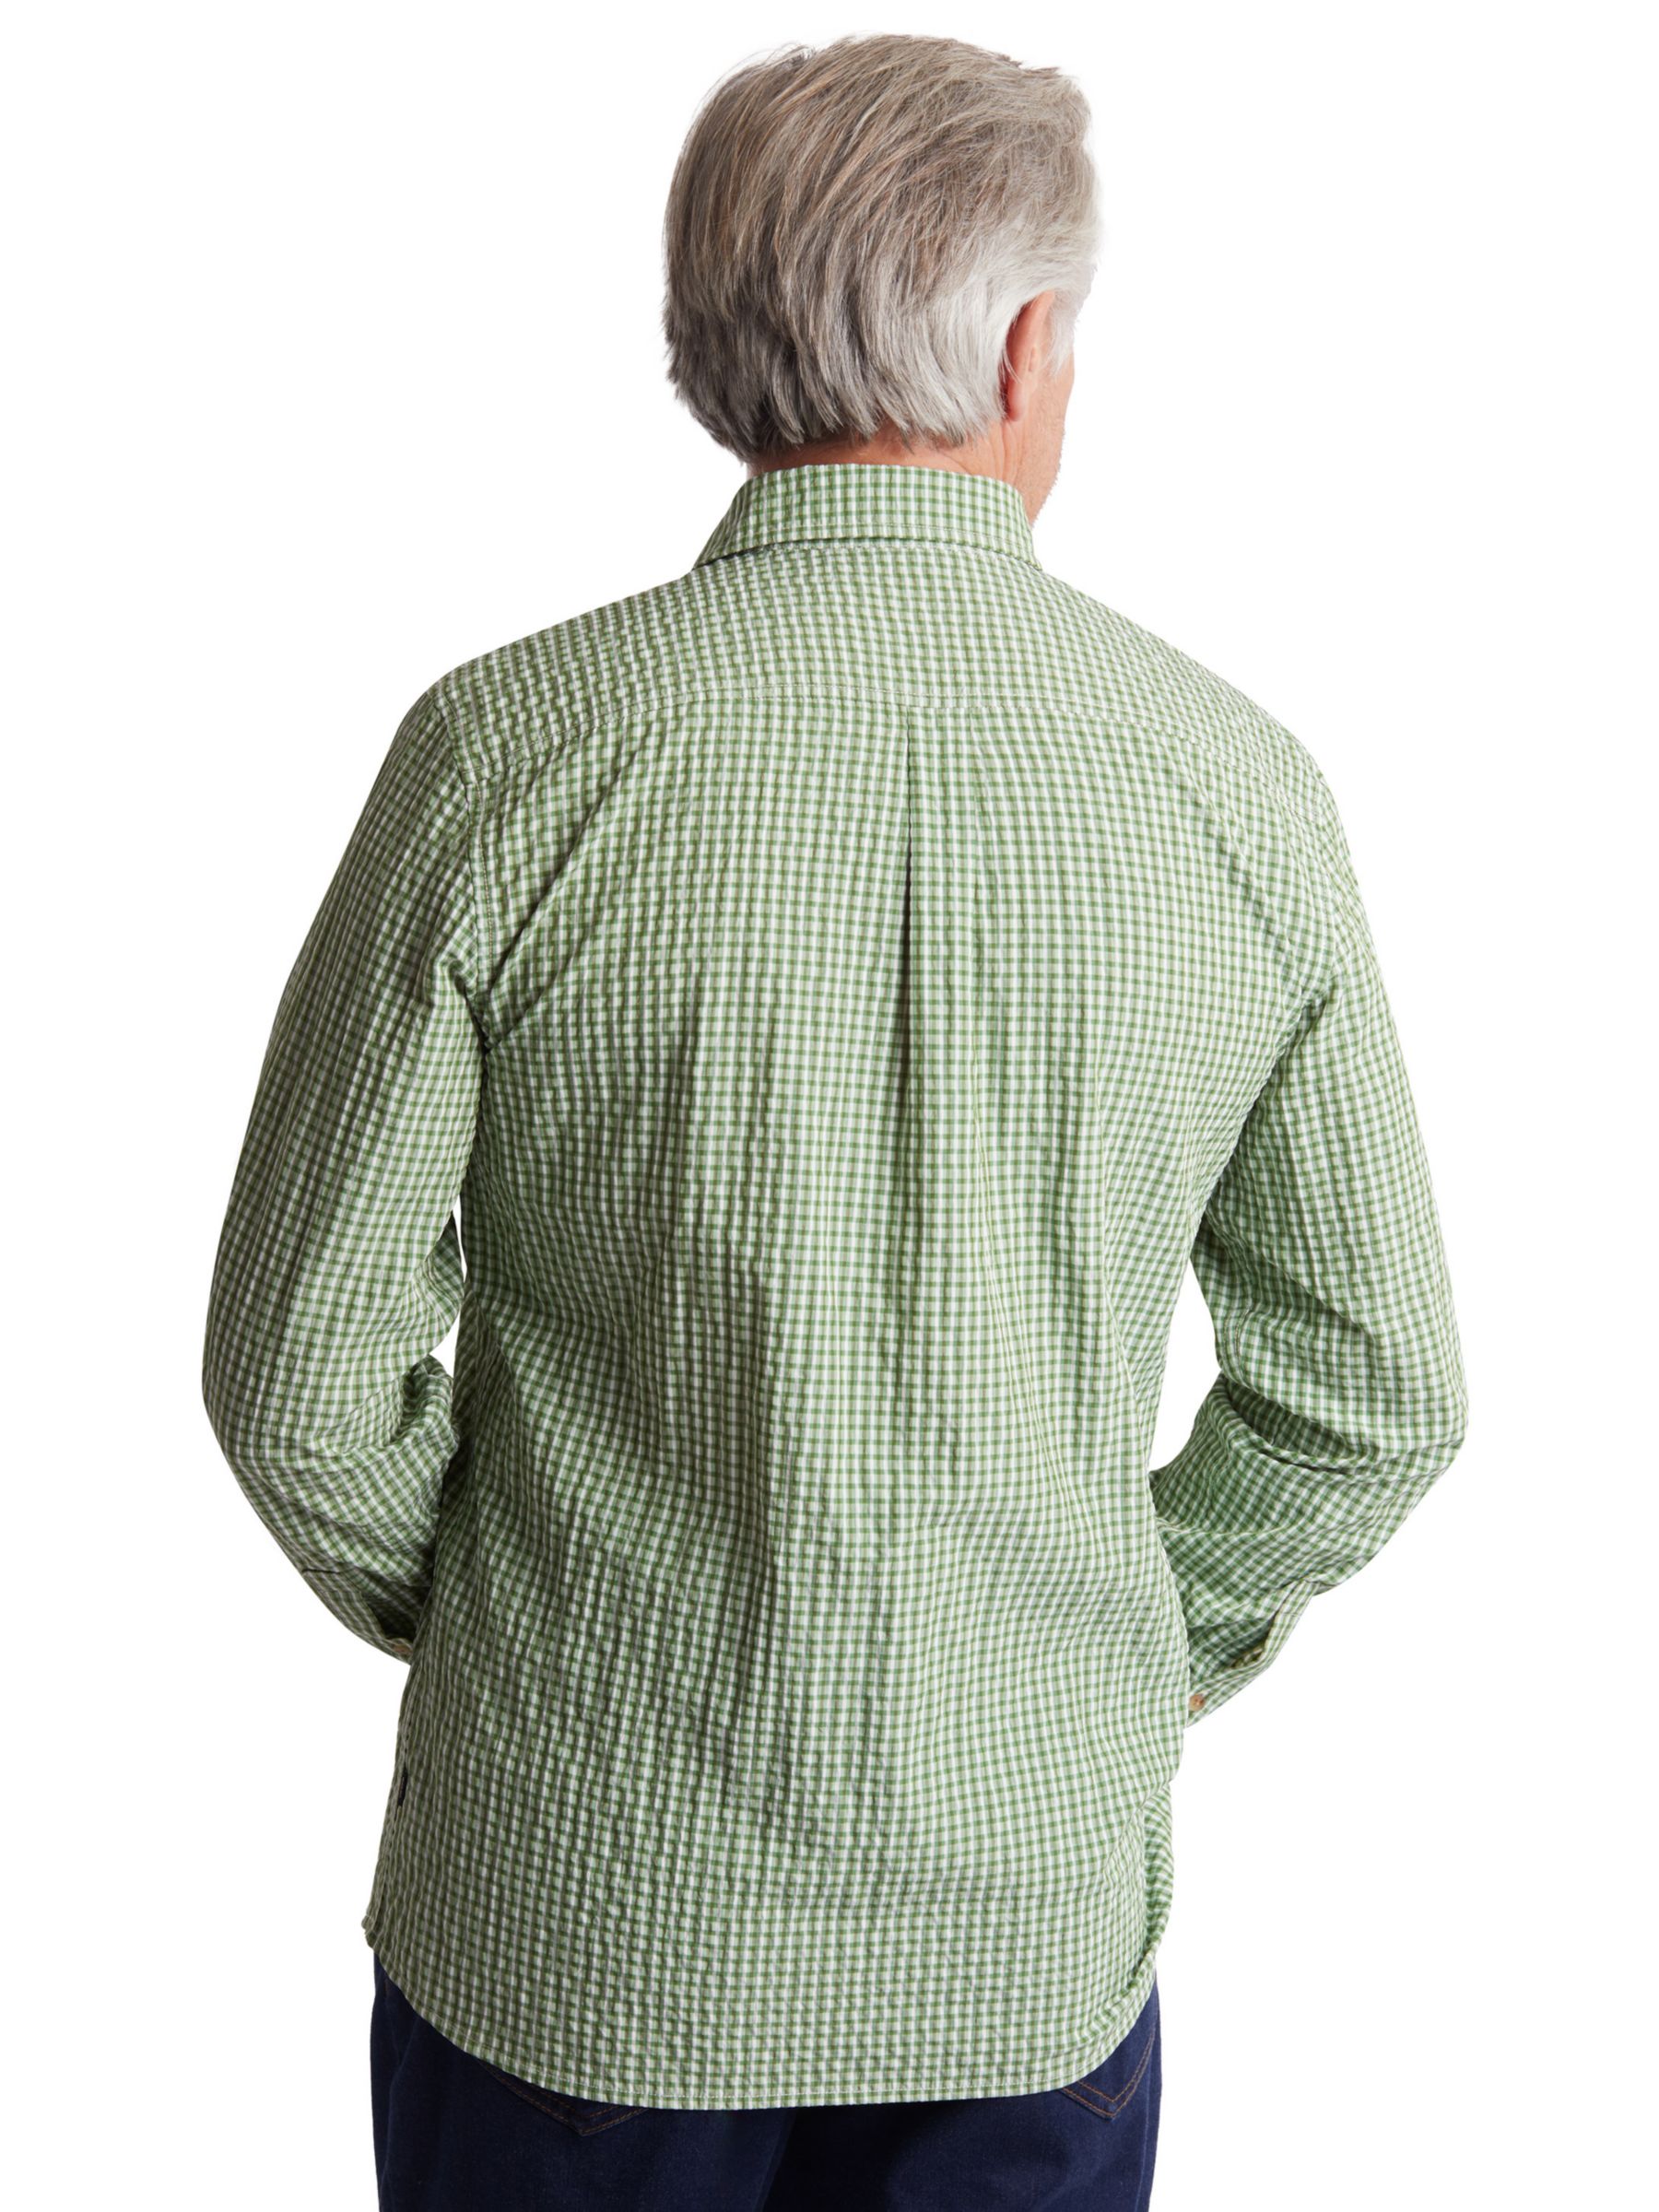 Rohan Isle Long Sleeve Seersucker Gingham Shirt, Alpine Green, S